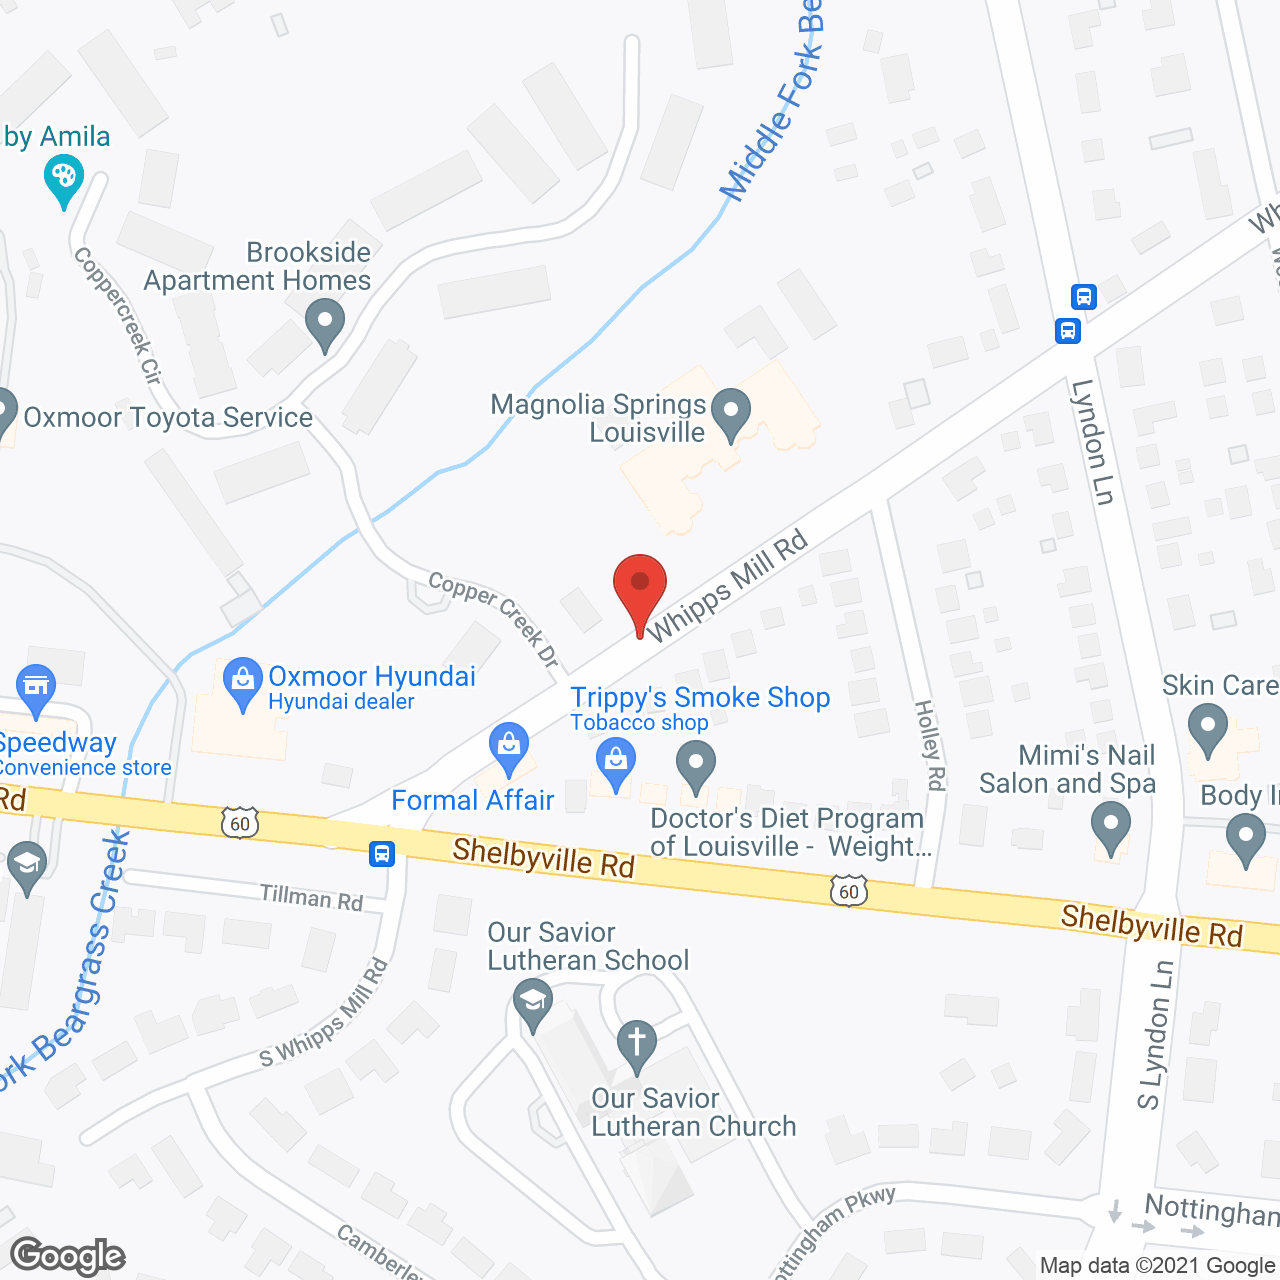 Magnolia Springs Louisville in google map